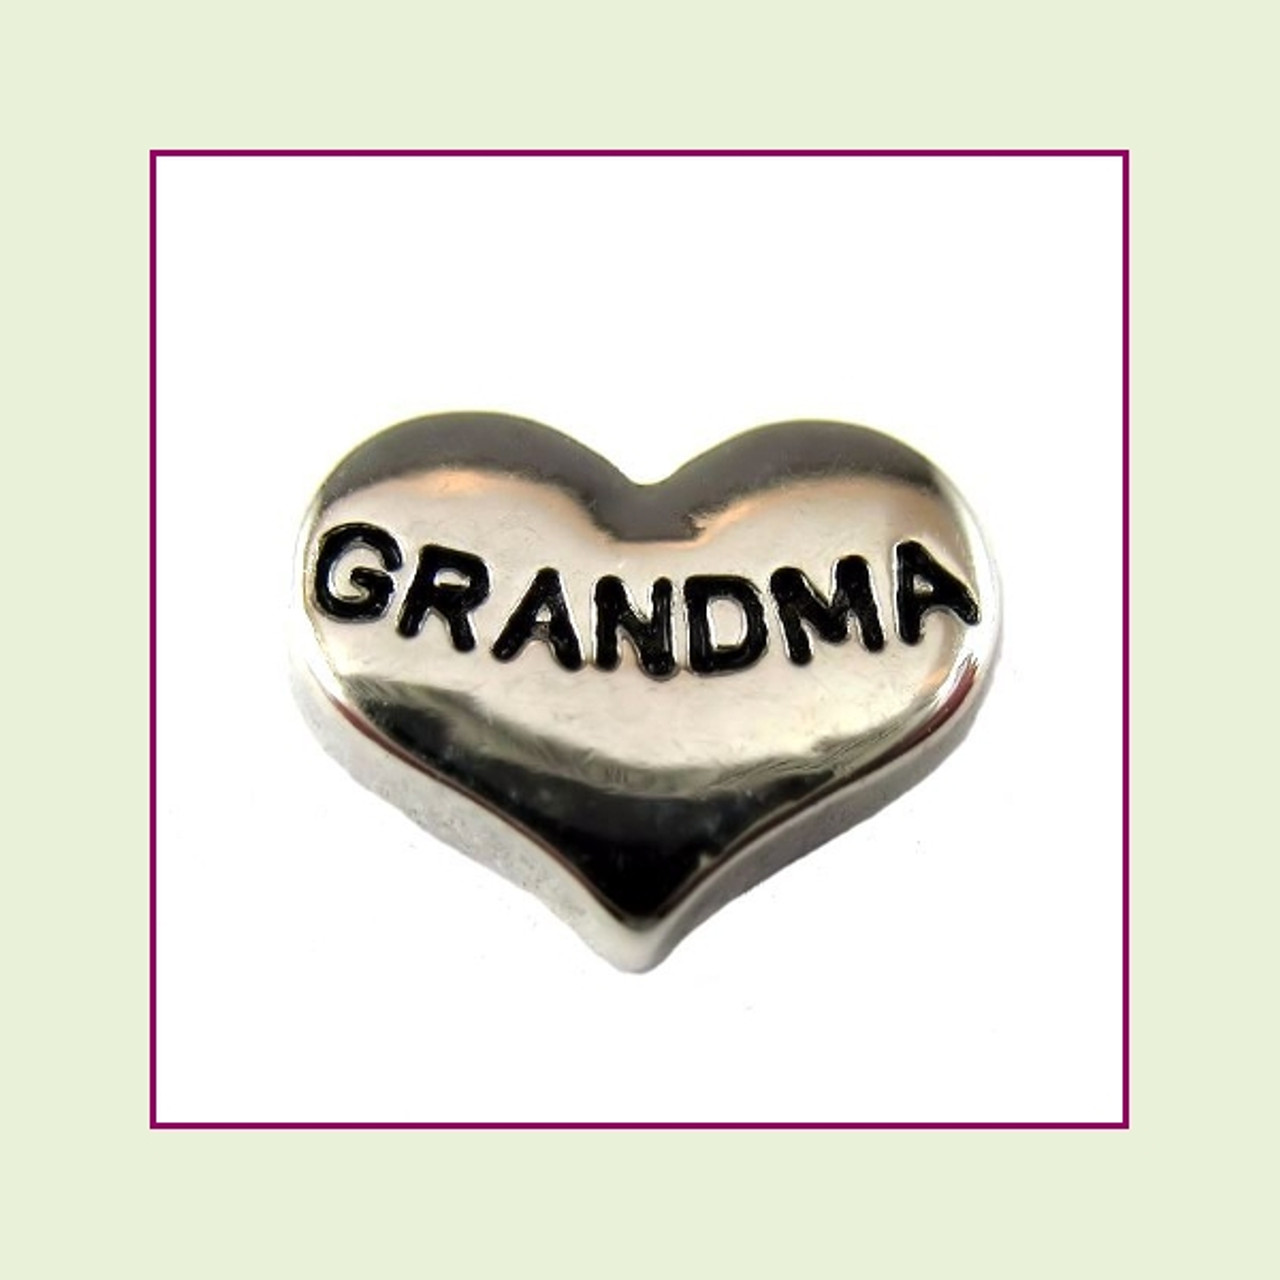 Grandma on Silver Heart Floating Charm